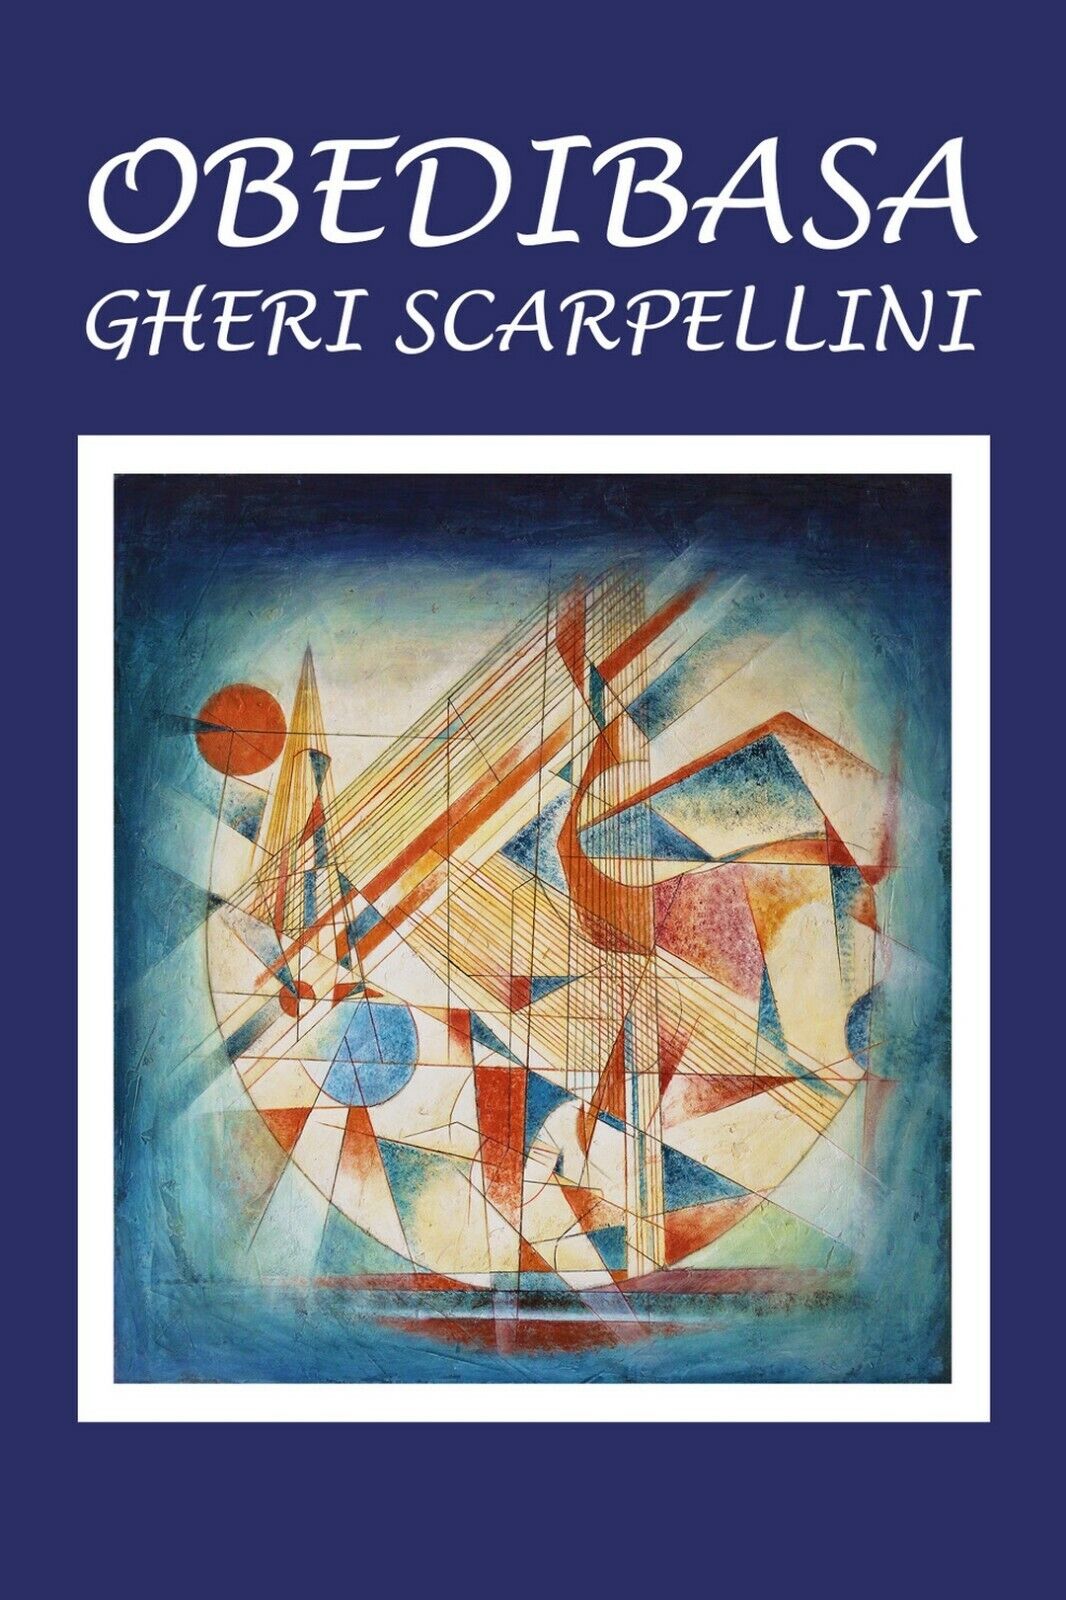 Obedibasa  di Gherardo Scarpellini,  2019,  Youcanprint